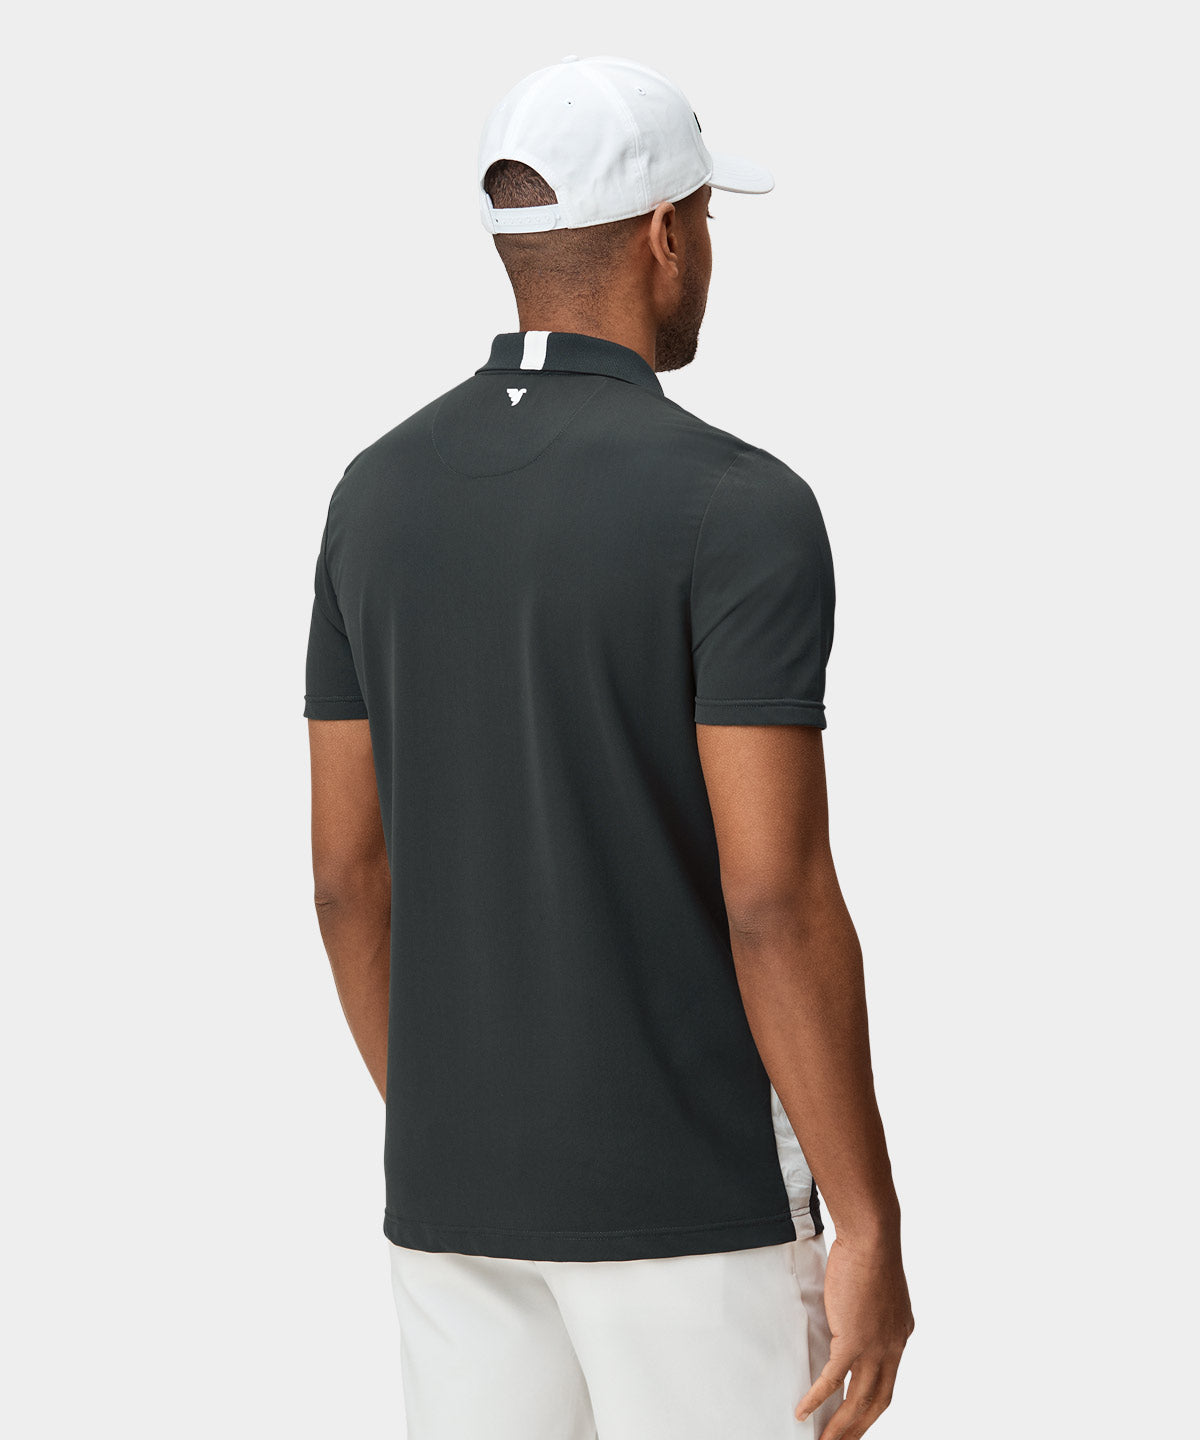 Nash Pebble Pro Shirt Macade Golf